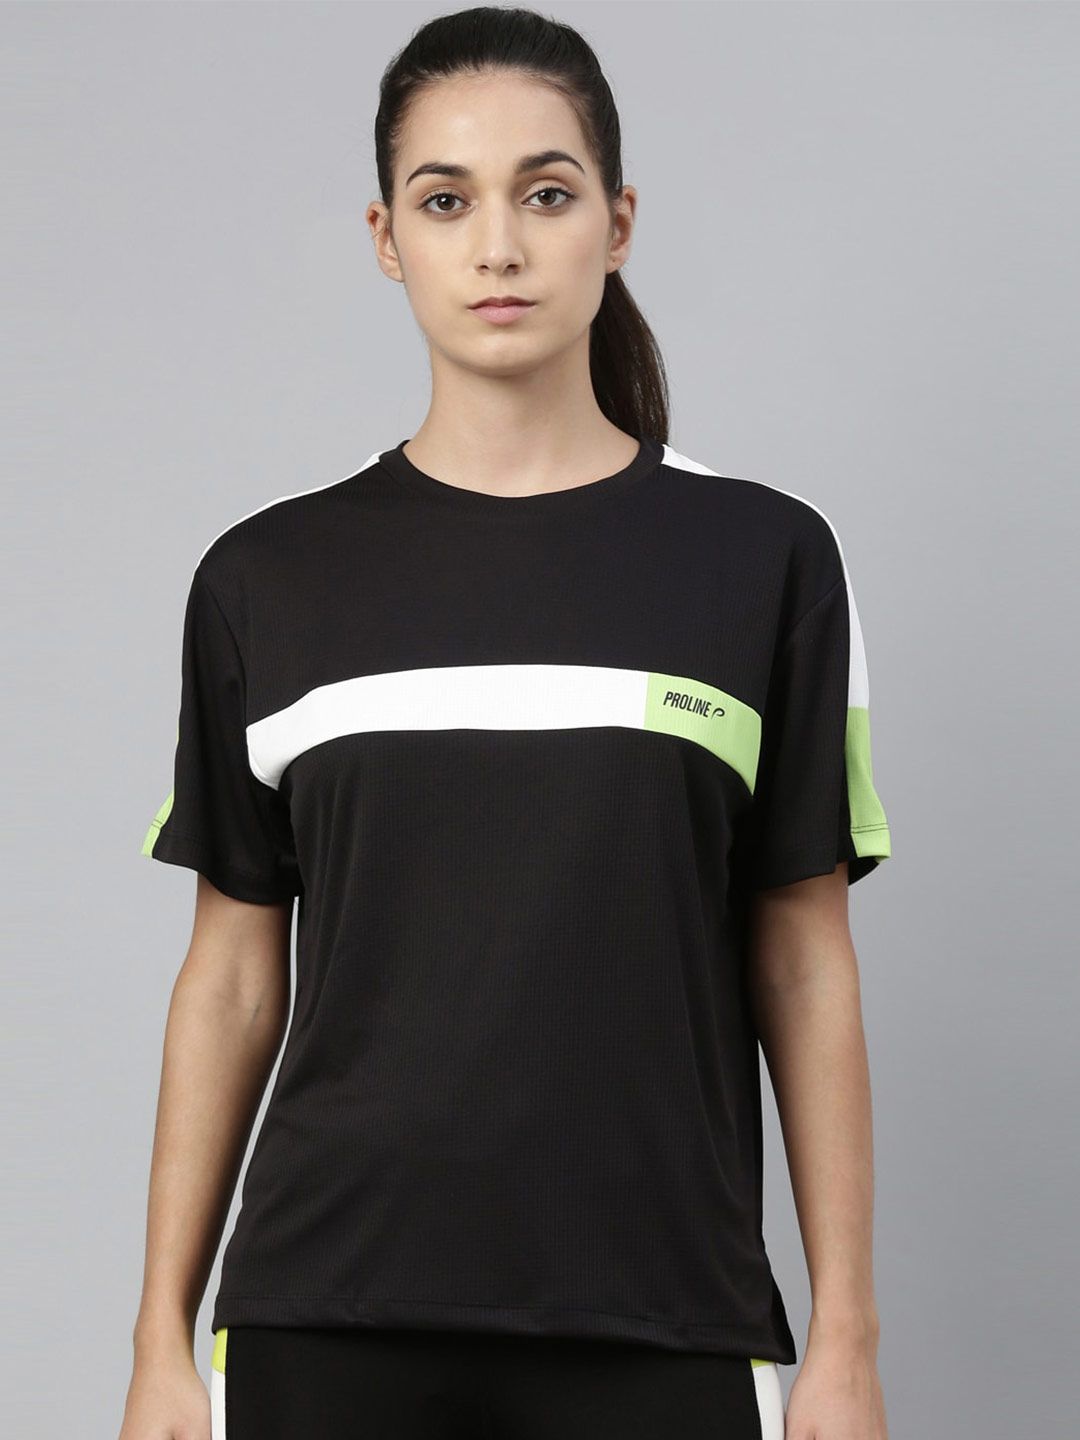 Proline Women Black & White Colourblocked T-shirt Price in India